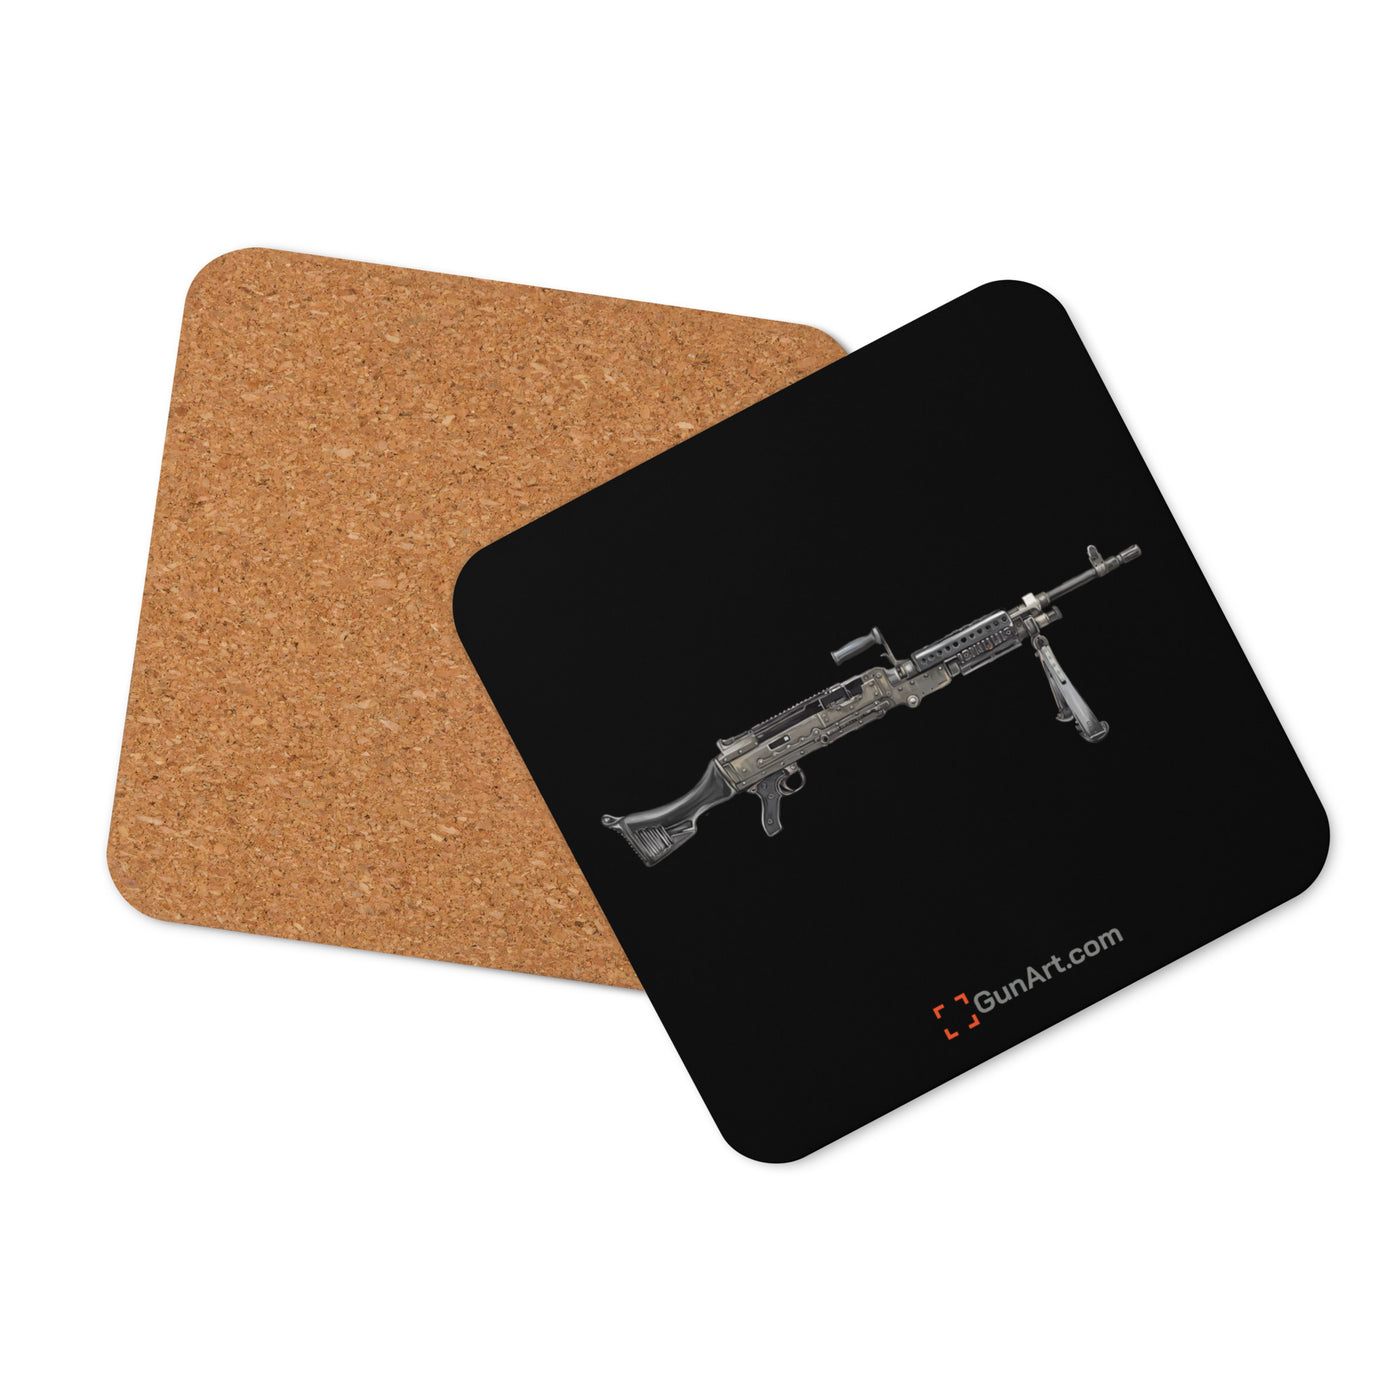 M240B - Belt Fed 7.62x51 Machine Gun Cork-back Coaster - Just The Piece - Black Background